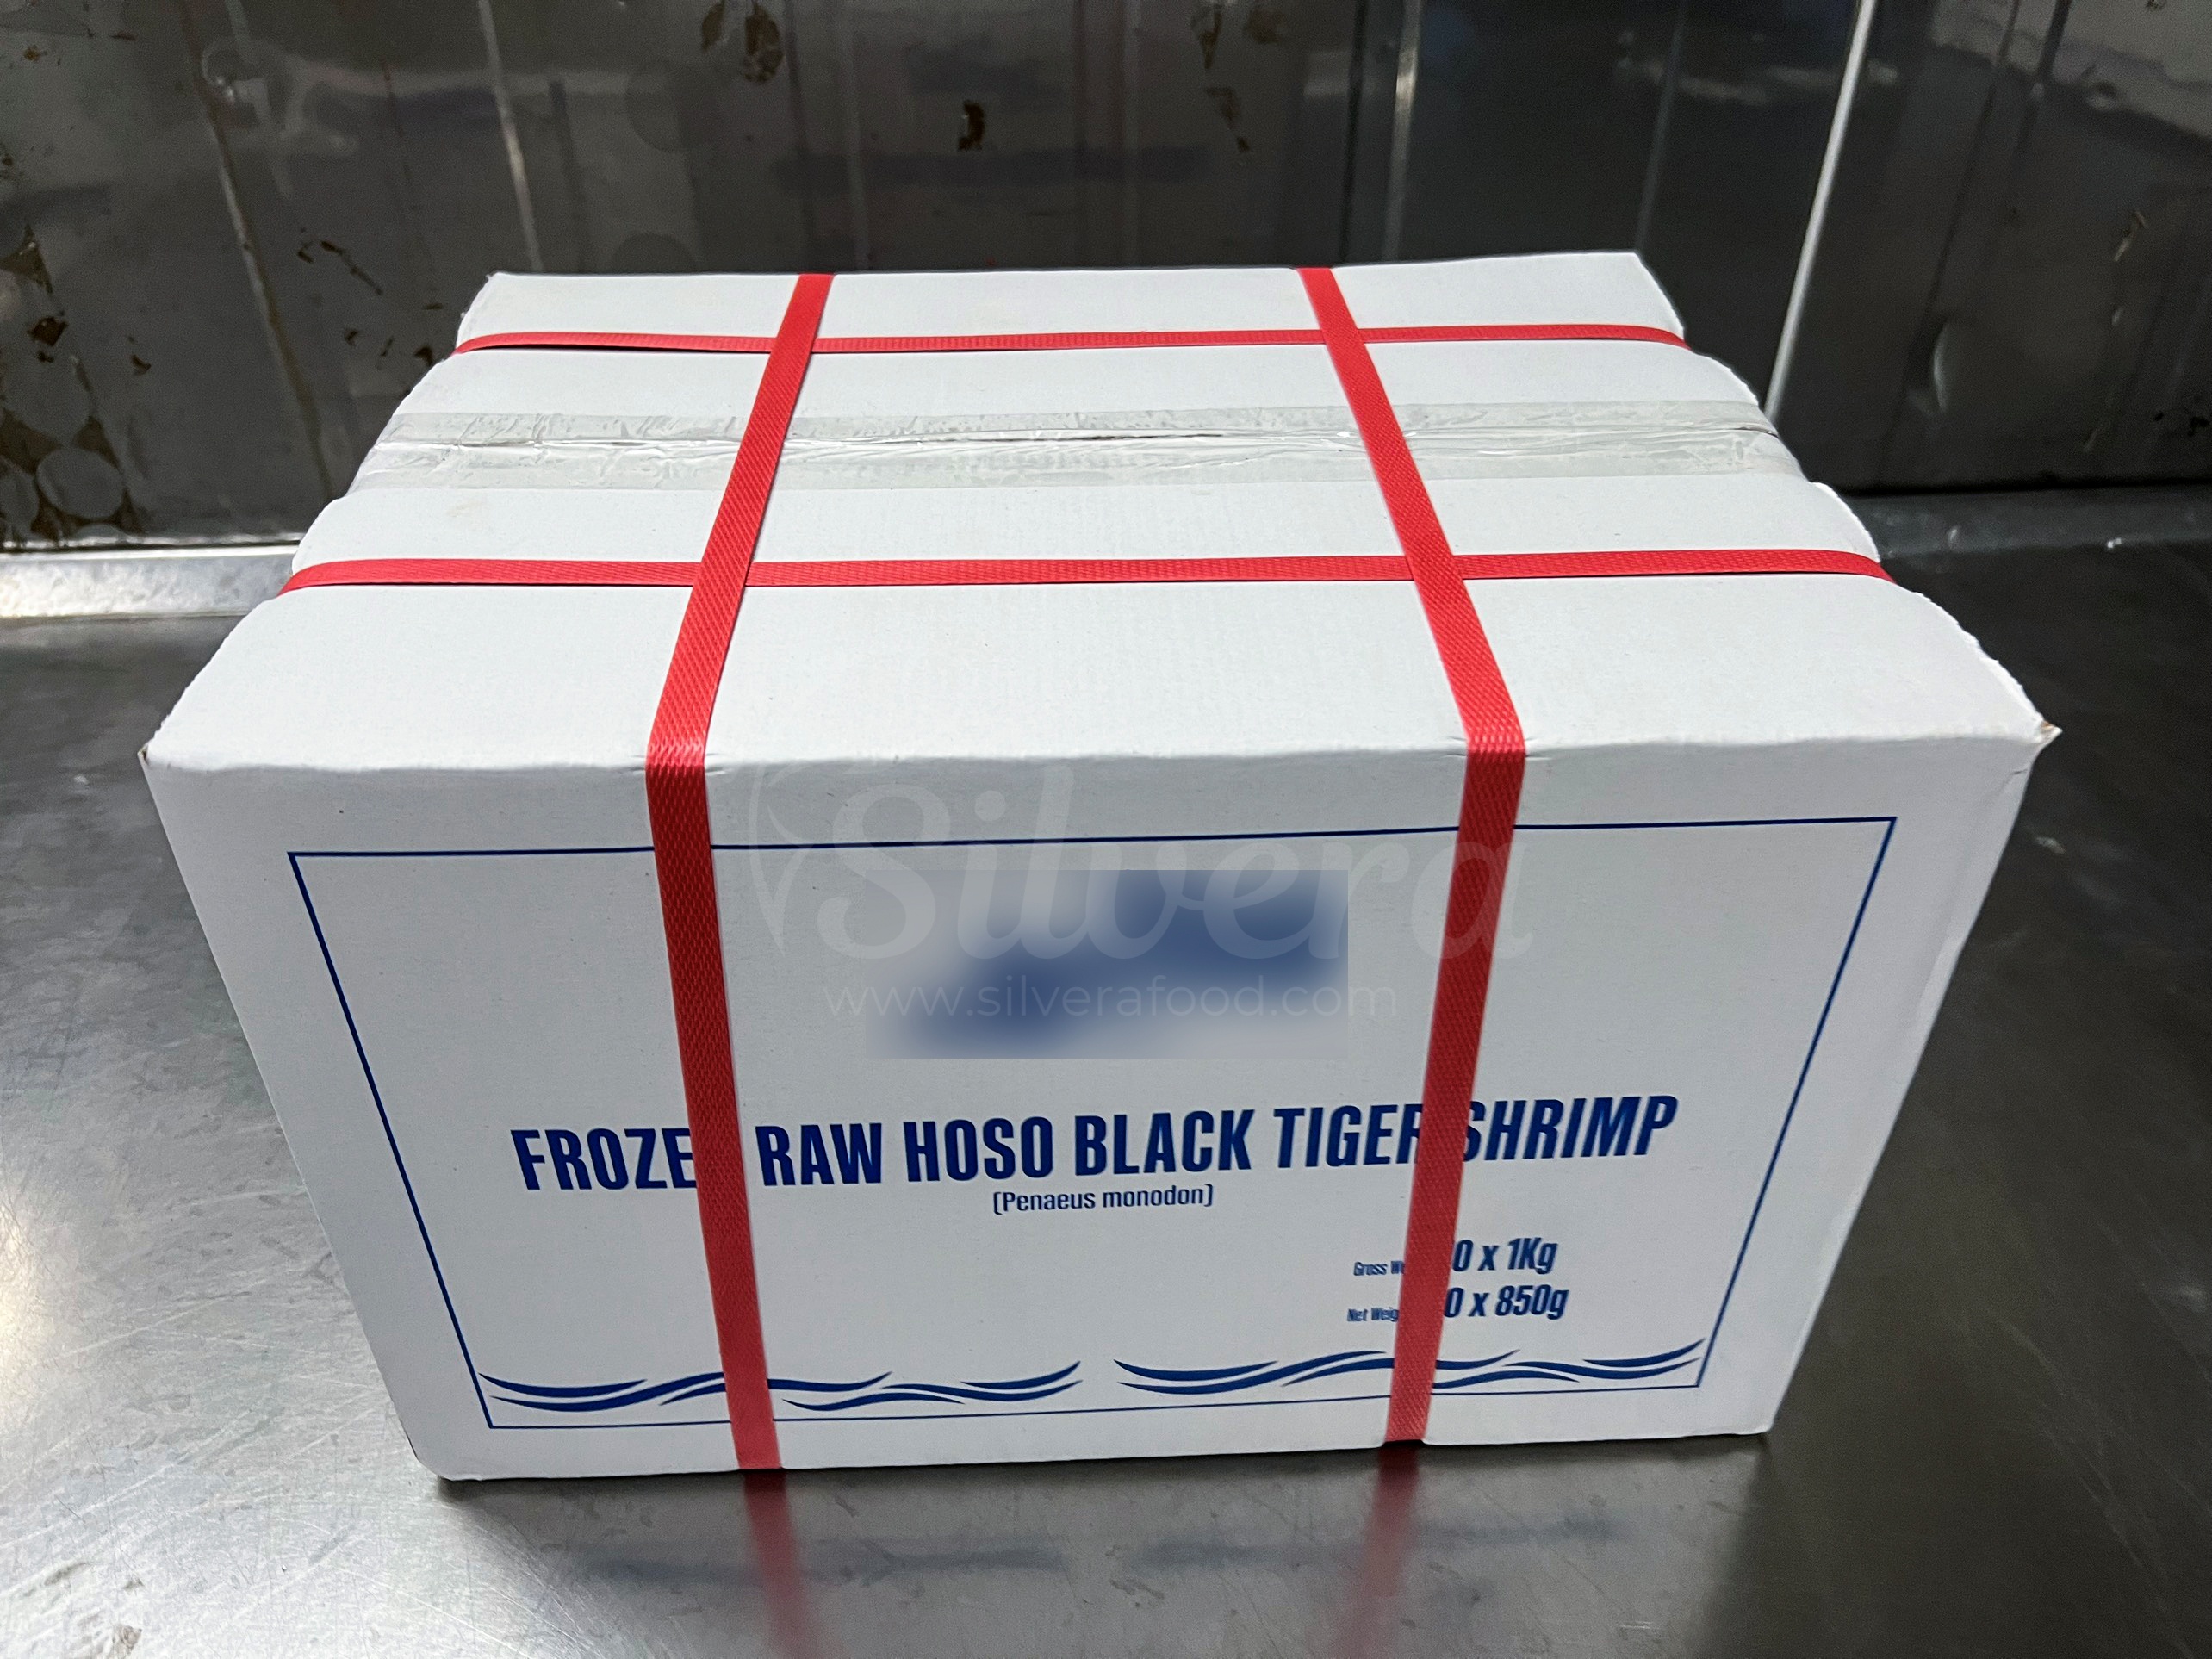 Black tiger shrimp carton